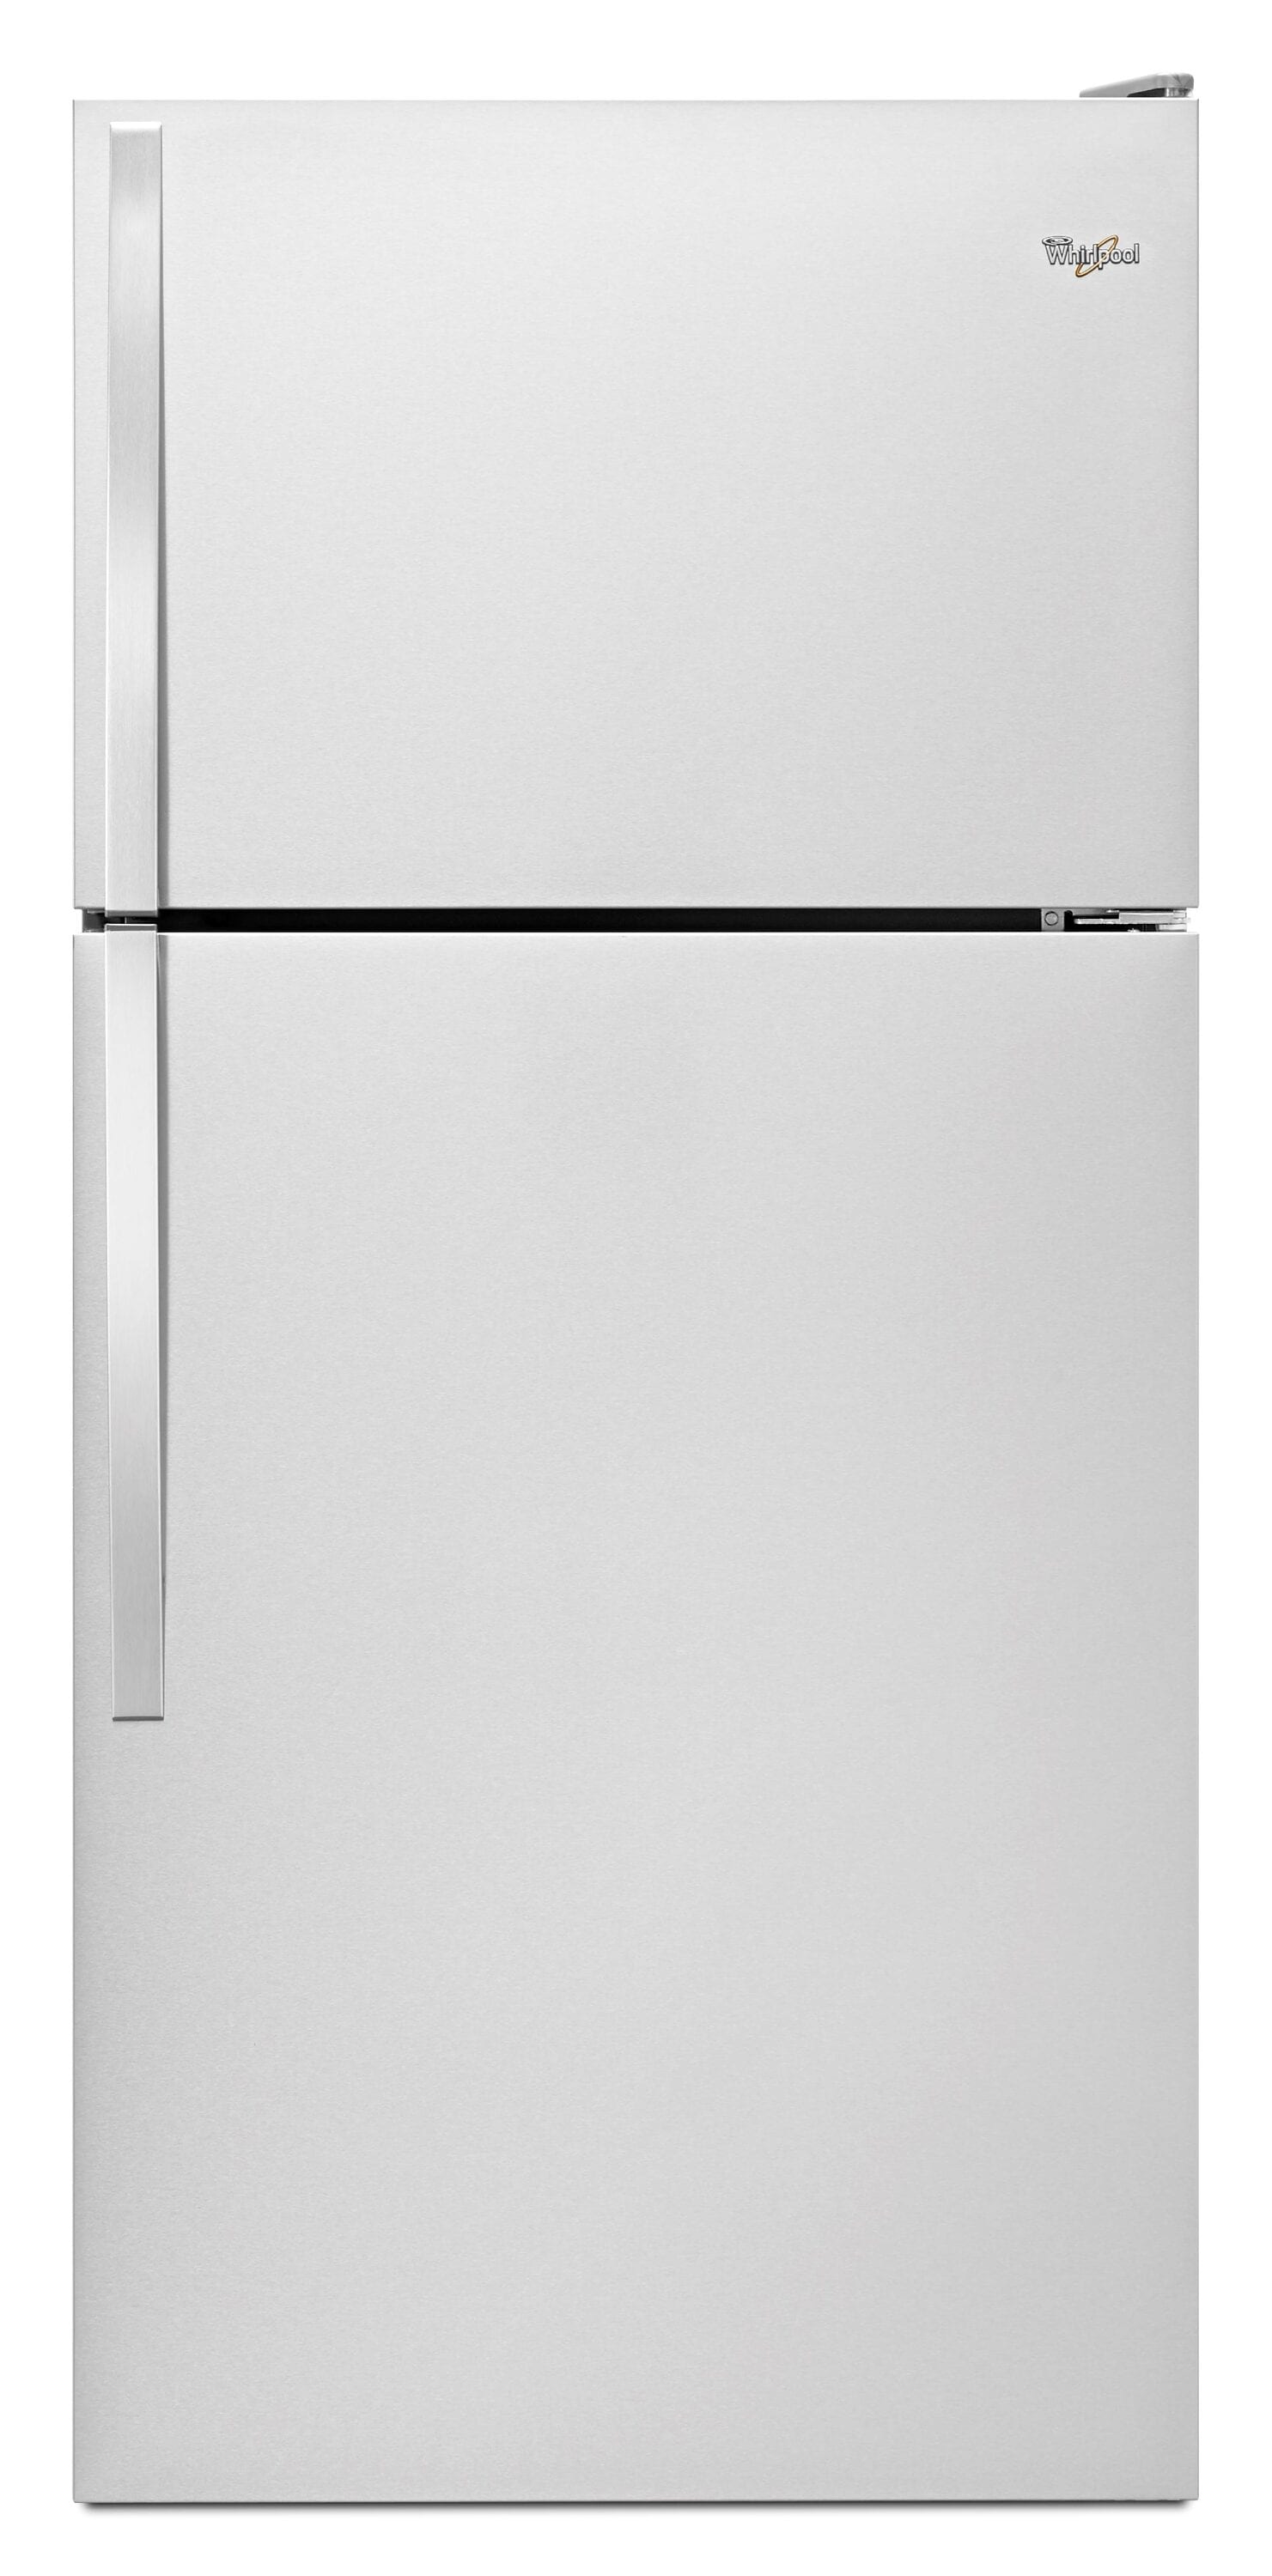 Whirlpool 18 cu. ft. Top Freezer Refrigerator with LED Lighting